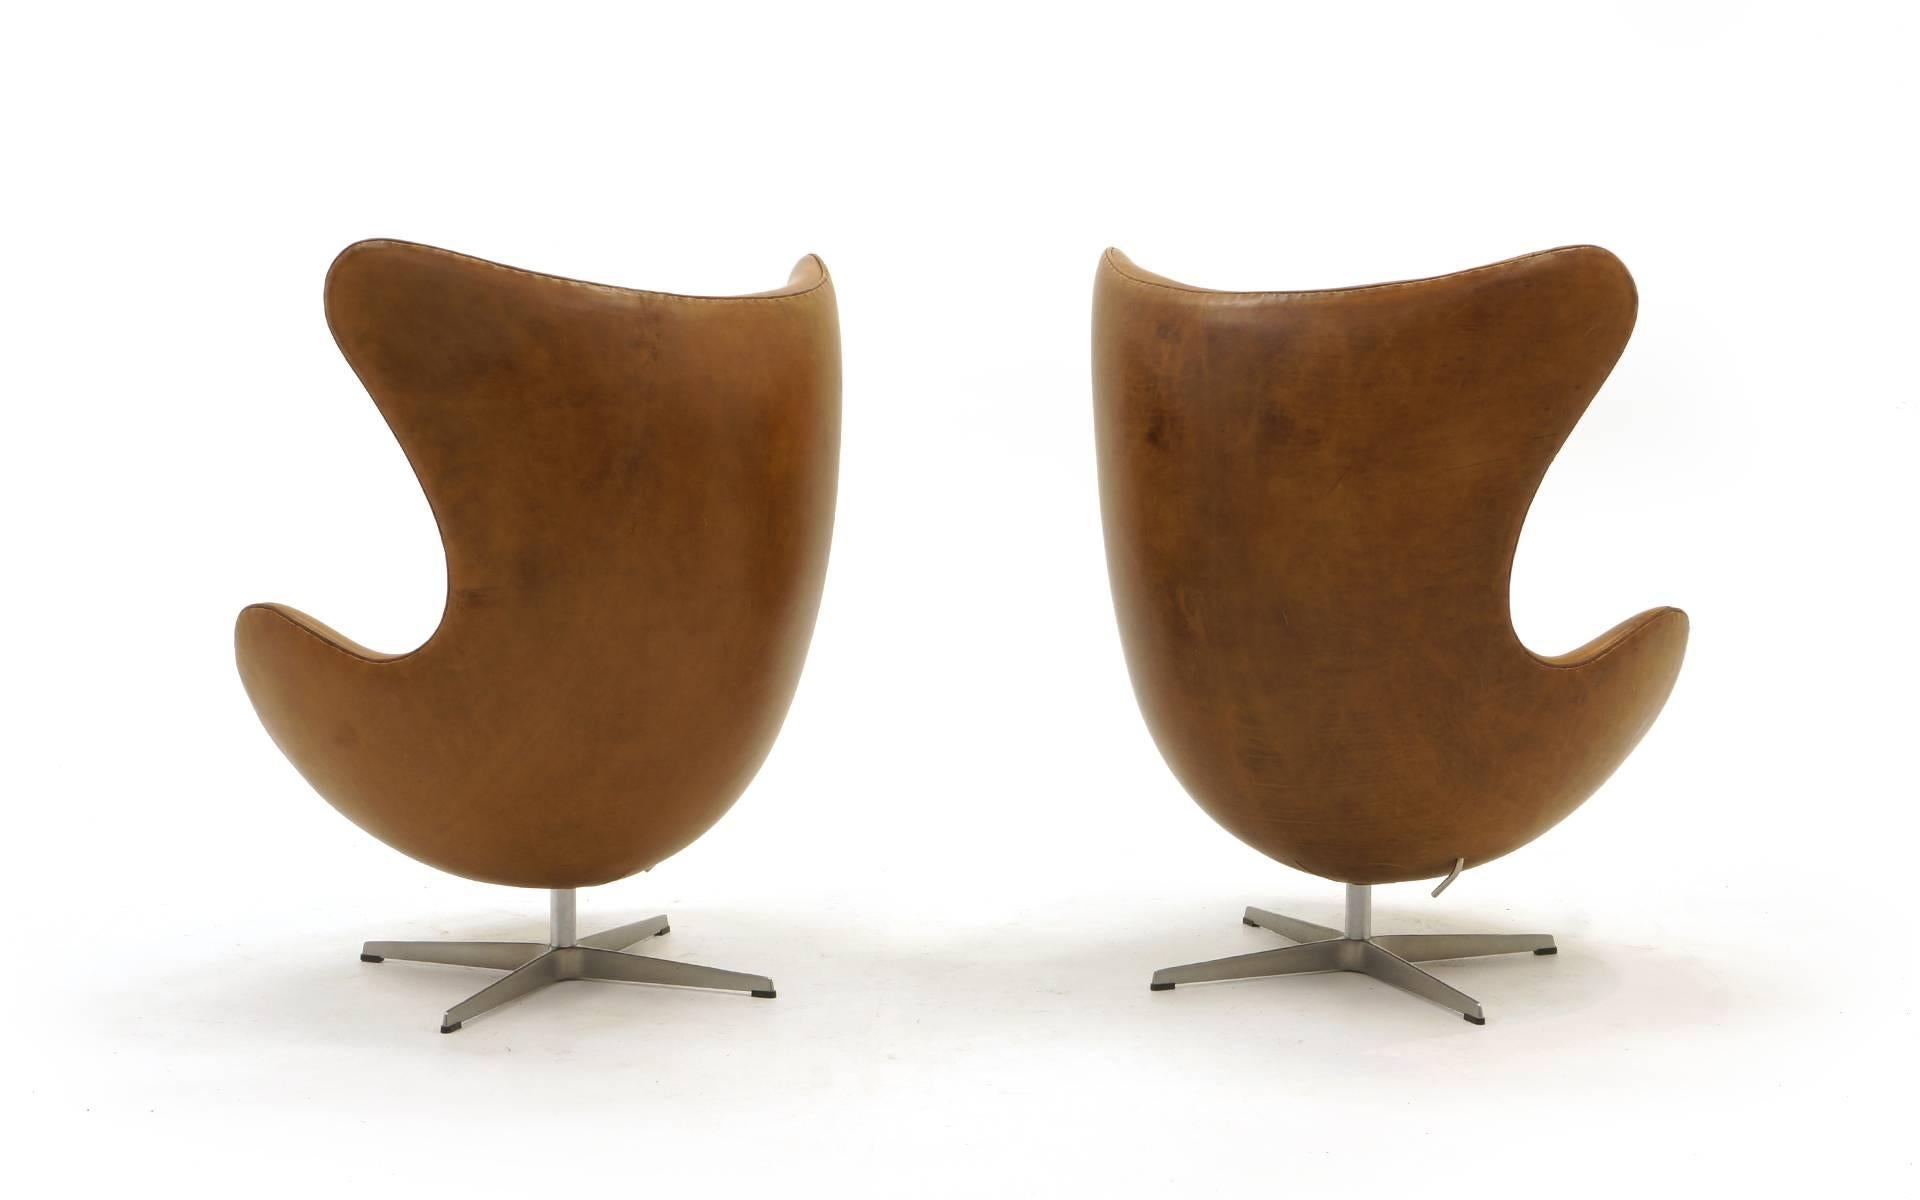 Scandinavian Modern Pair of Arne Jacobsen Egg Chairs in Cognac / Tan Leather, Made by Fritz Hansen